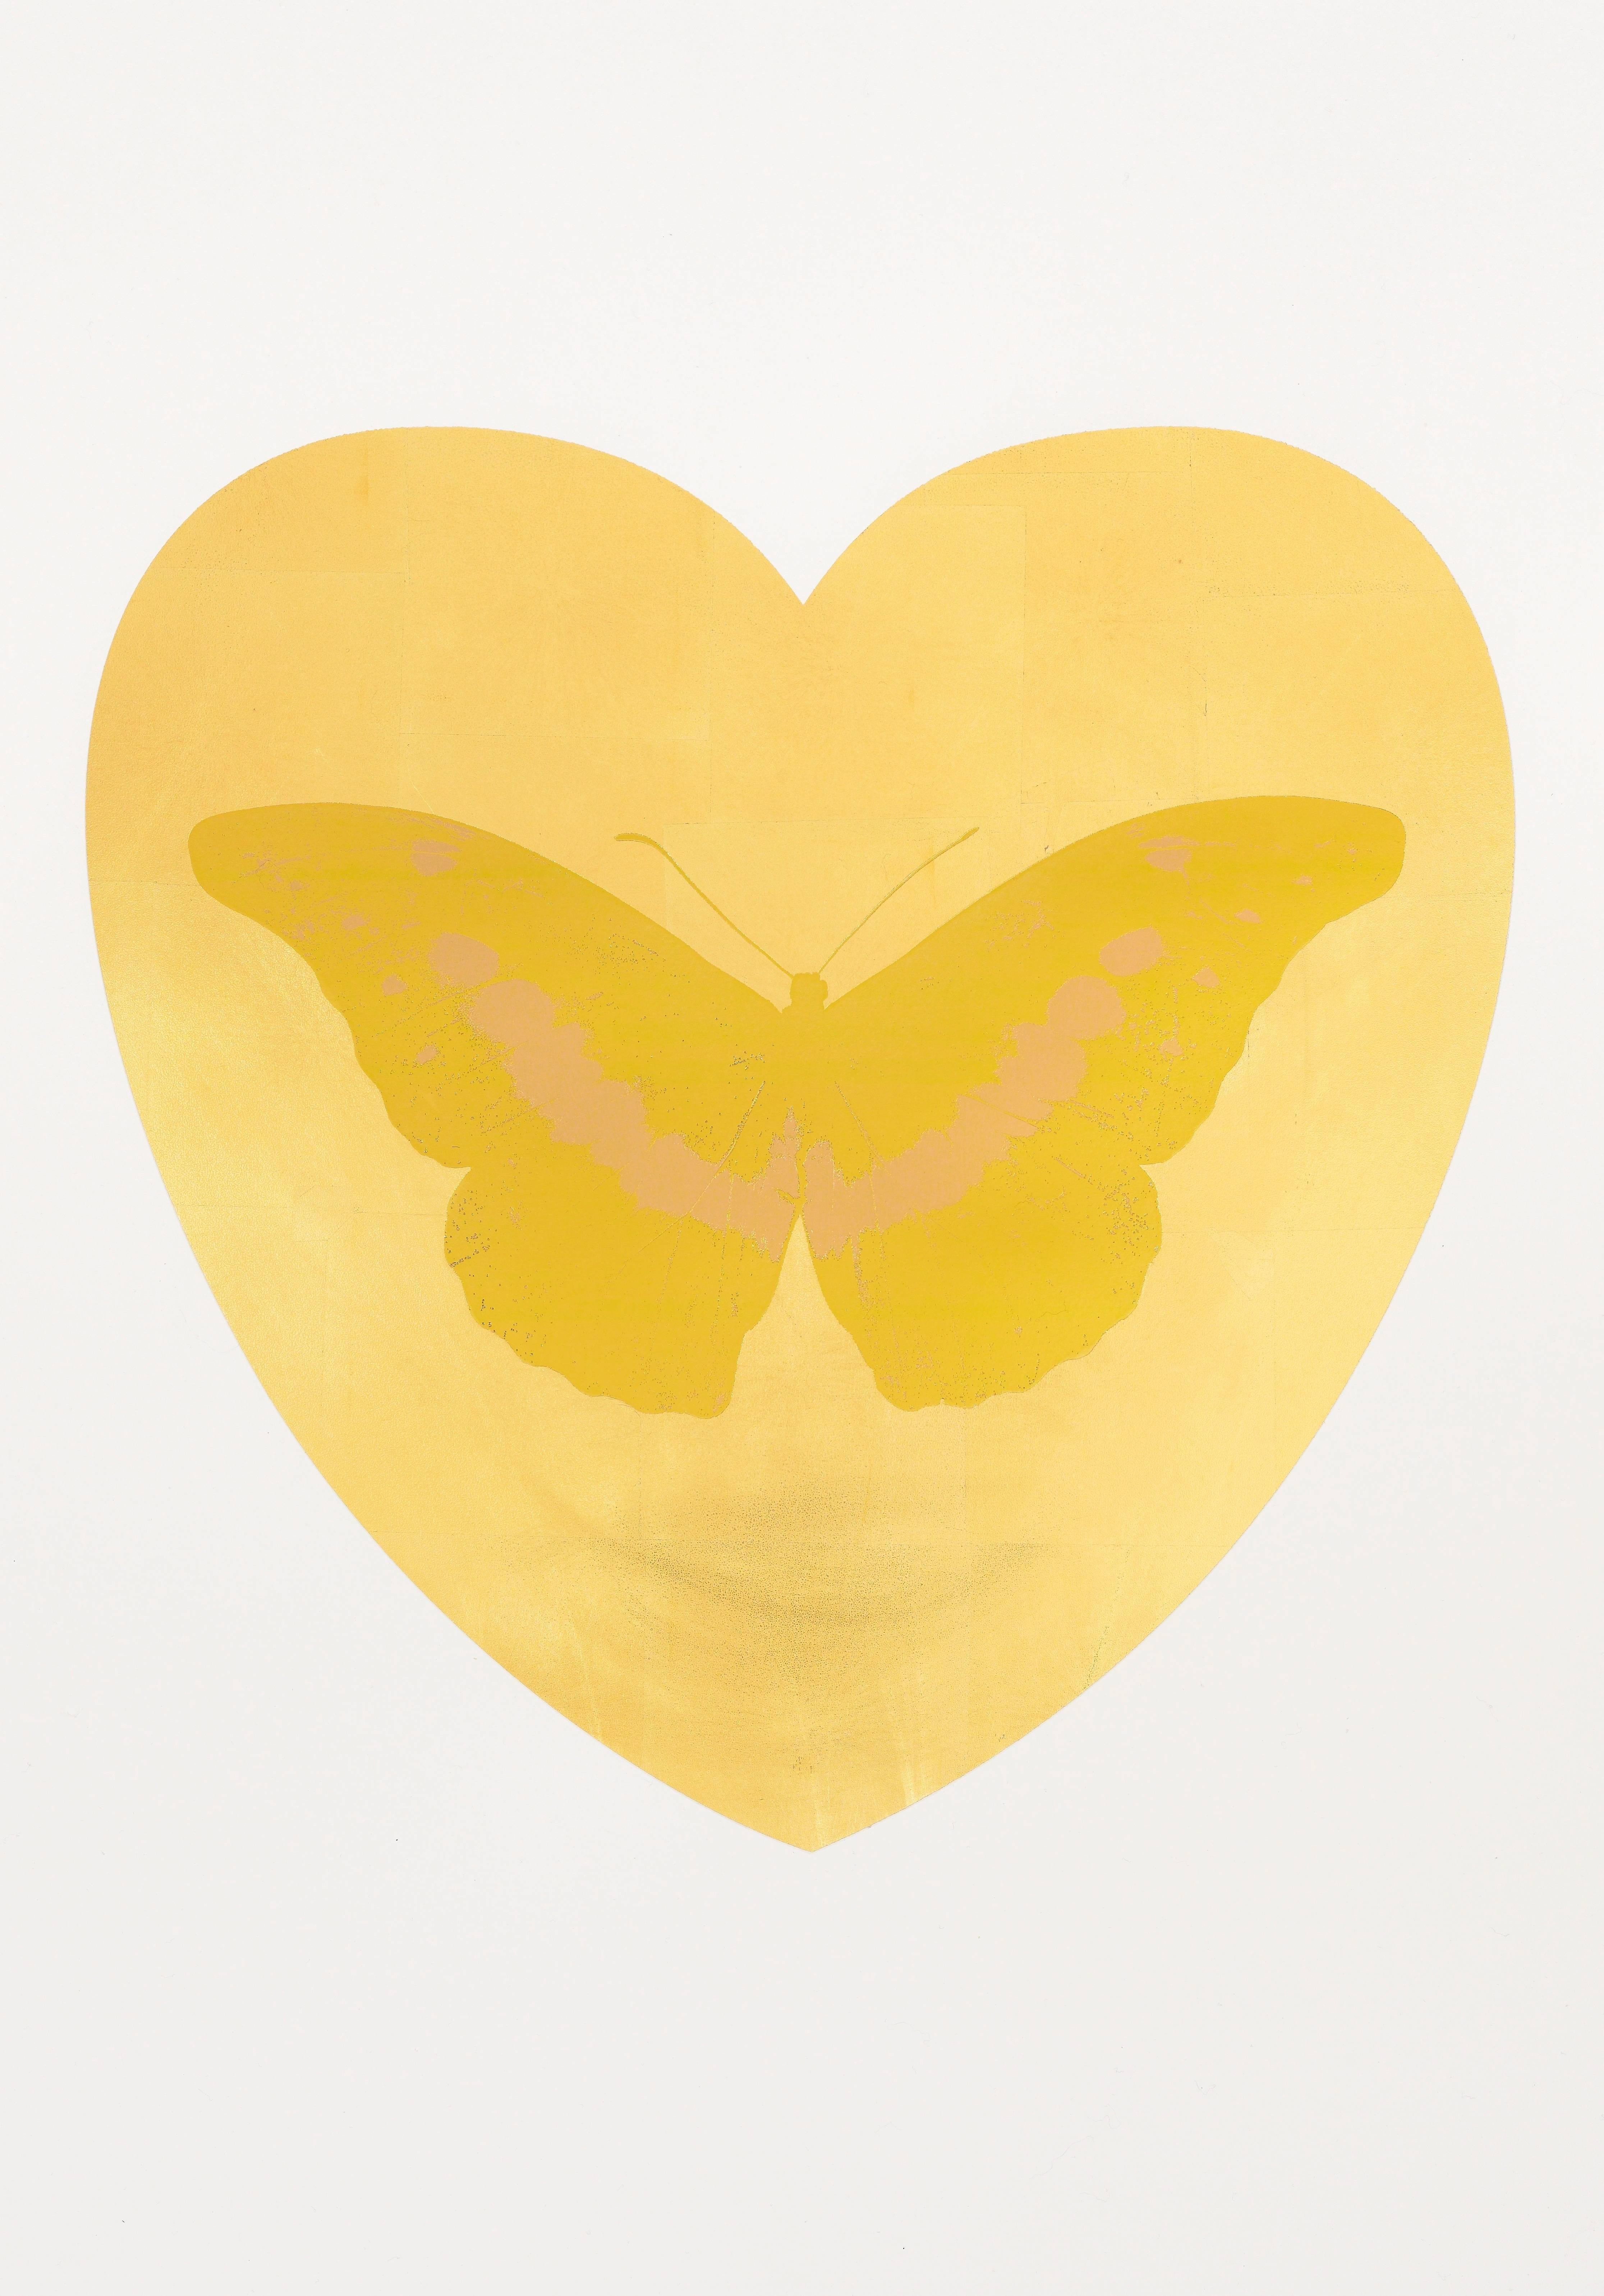 Damien Hirst Animal Print - I Love You - Gold Leaf/Oriental Gold/Cool Gold